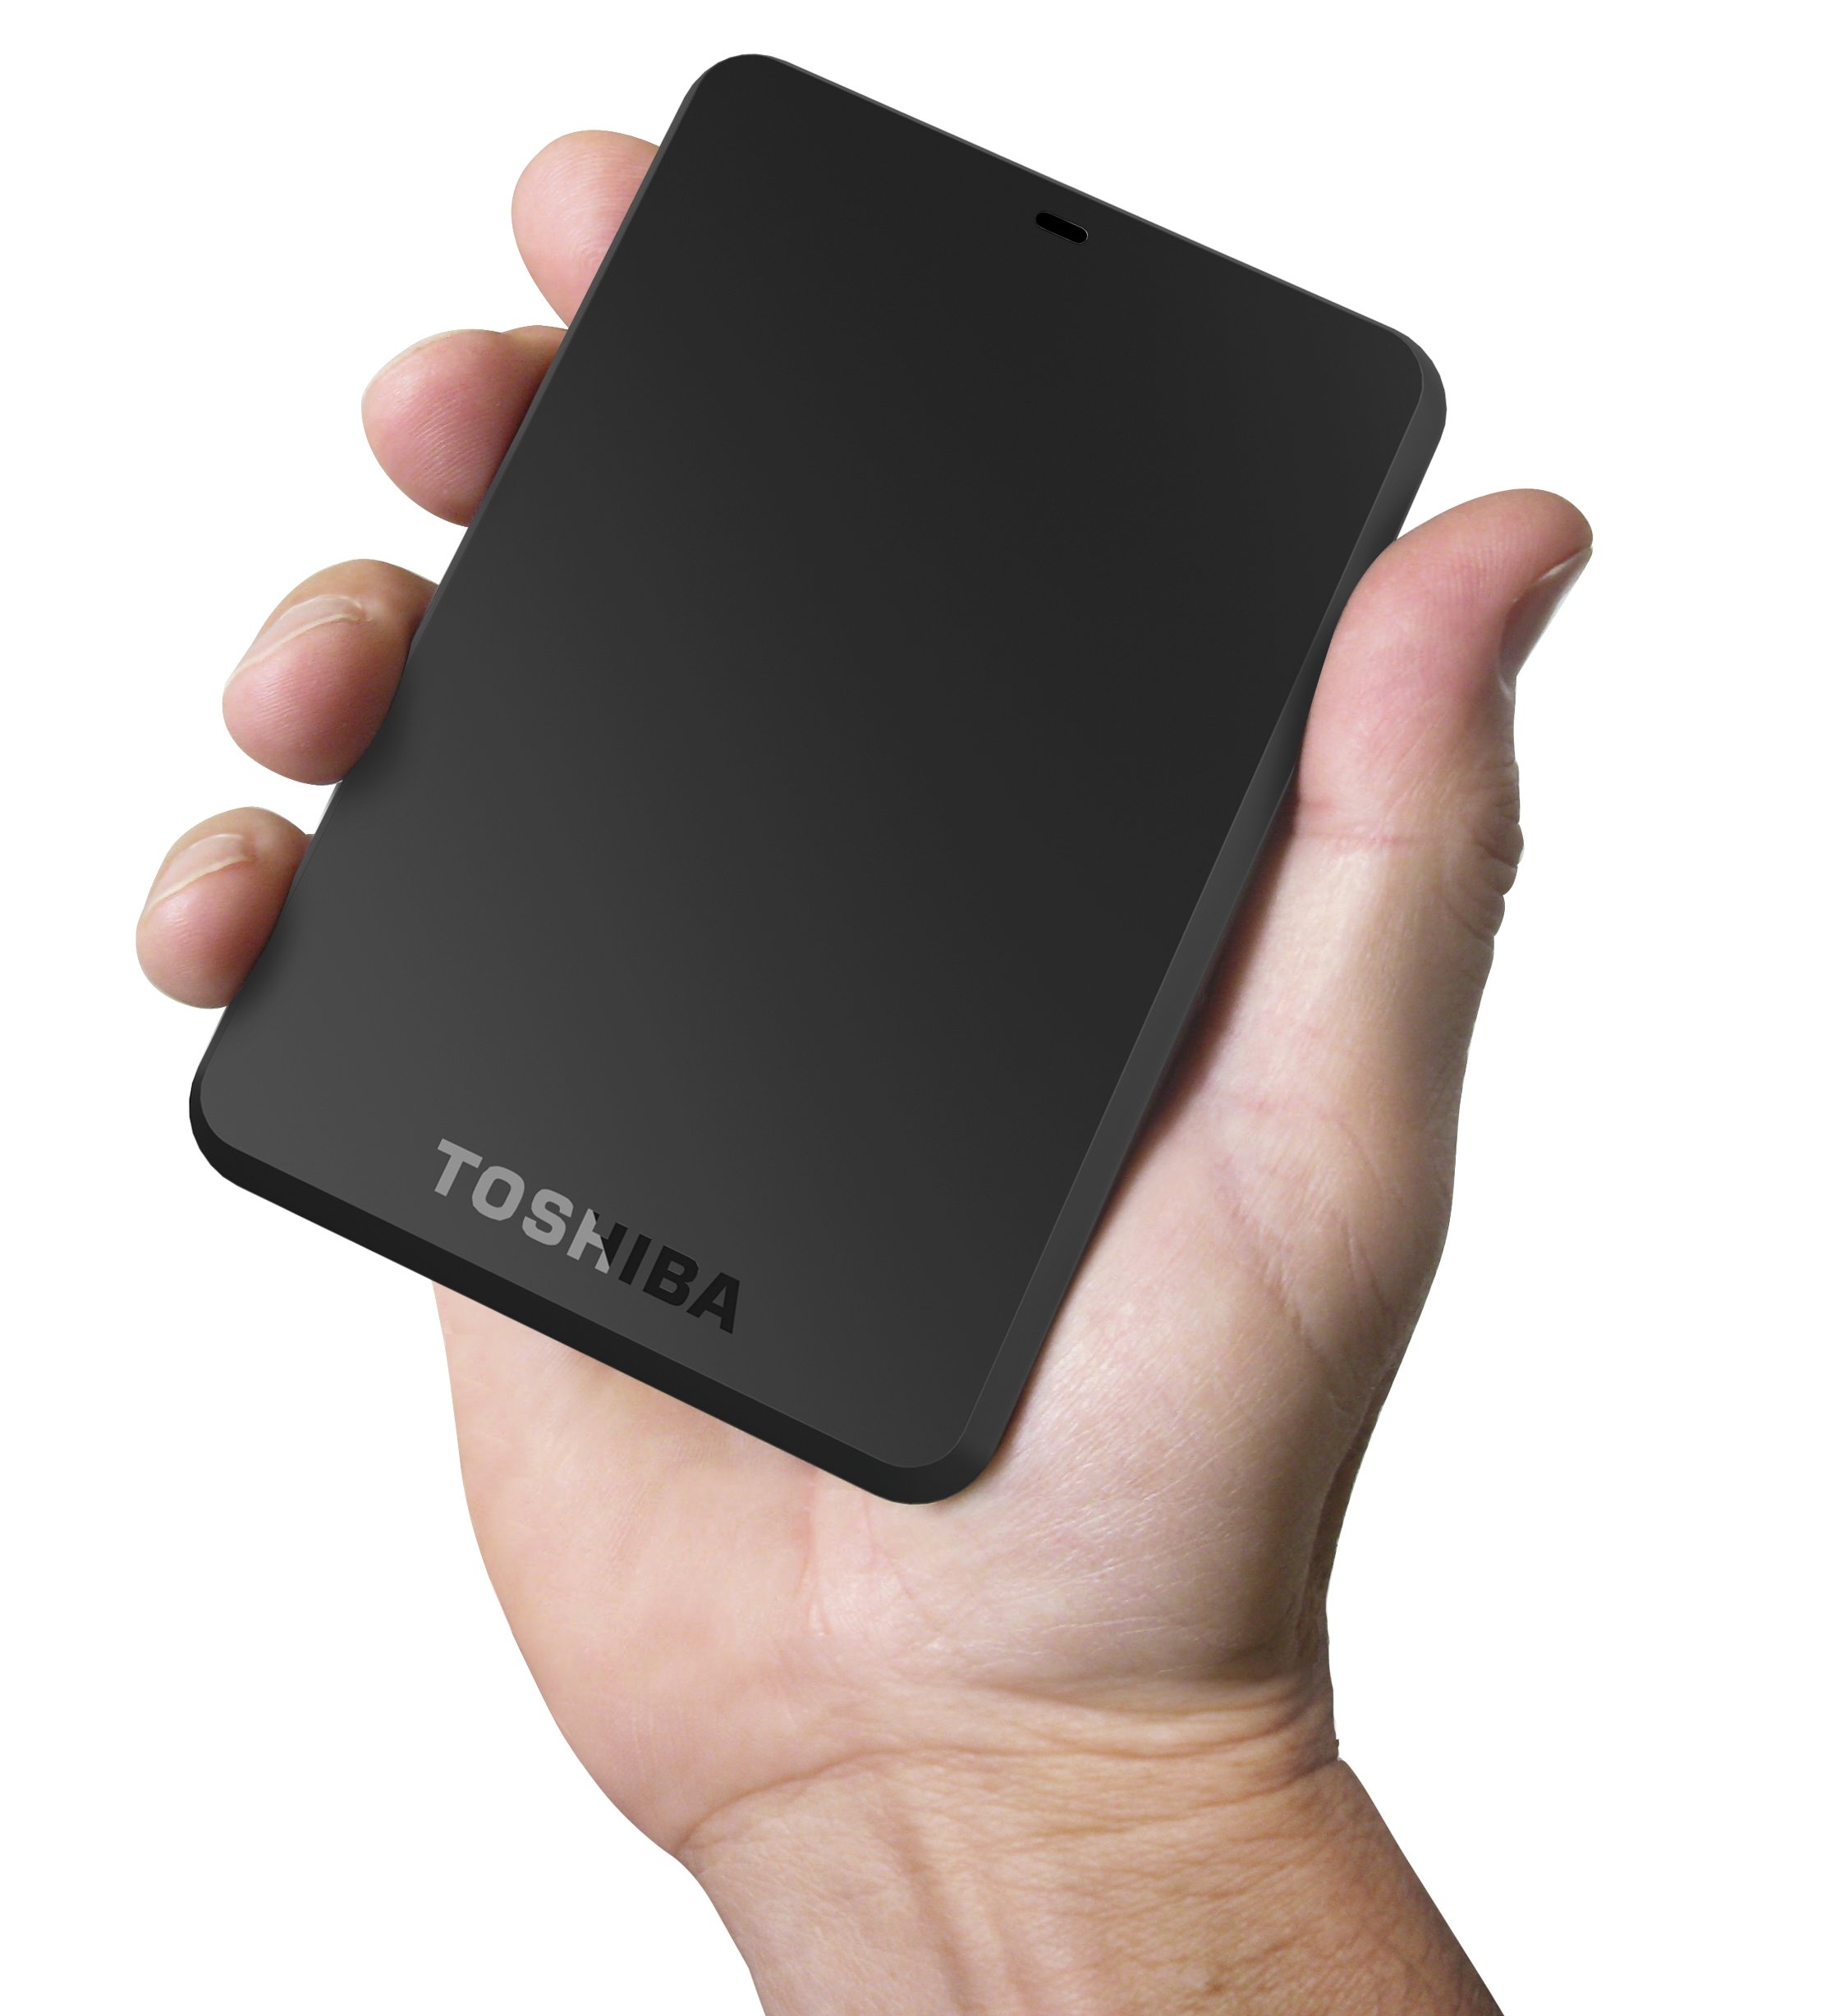 Toshiba Canvio 750 GB USB 3.0 Basics Portable Hard Drive - HDTB107XK3AA(Black)